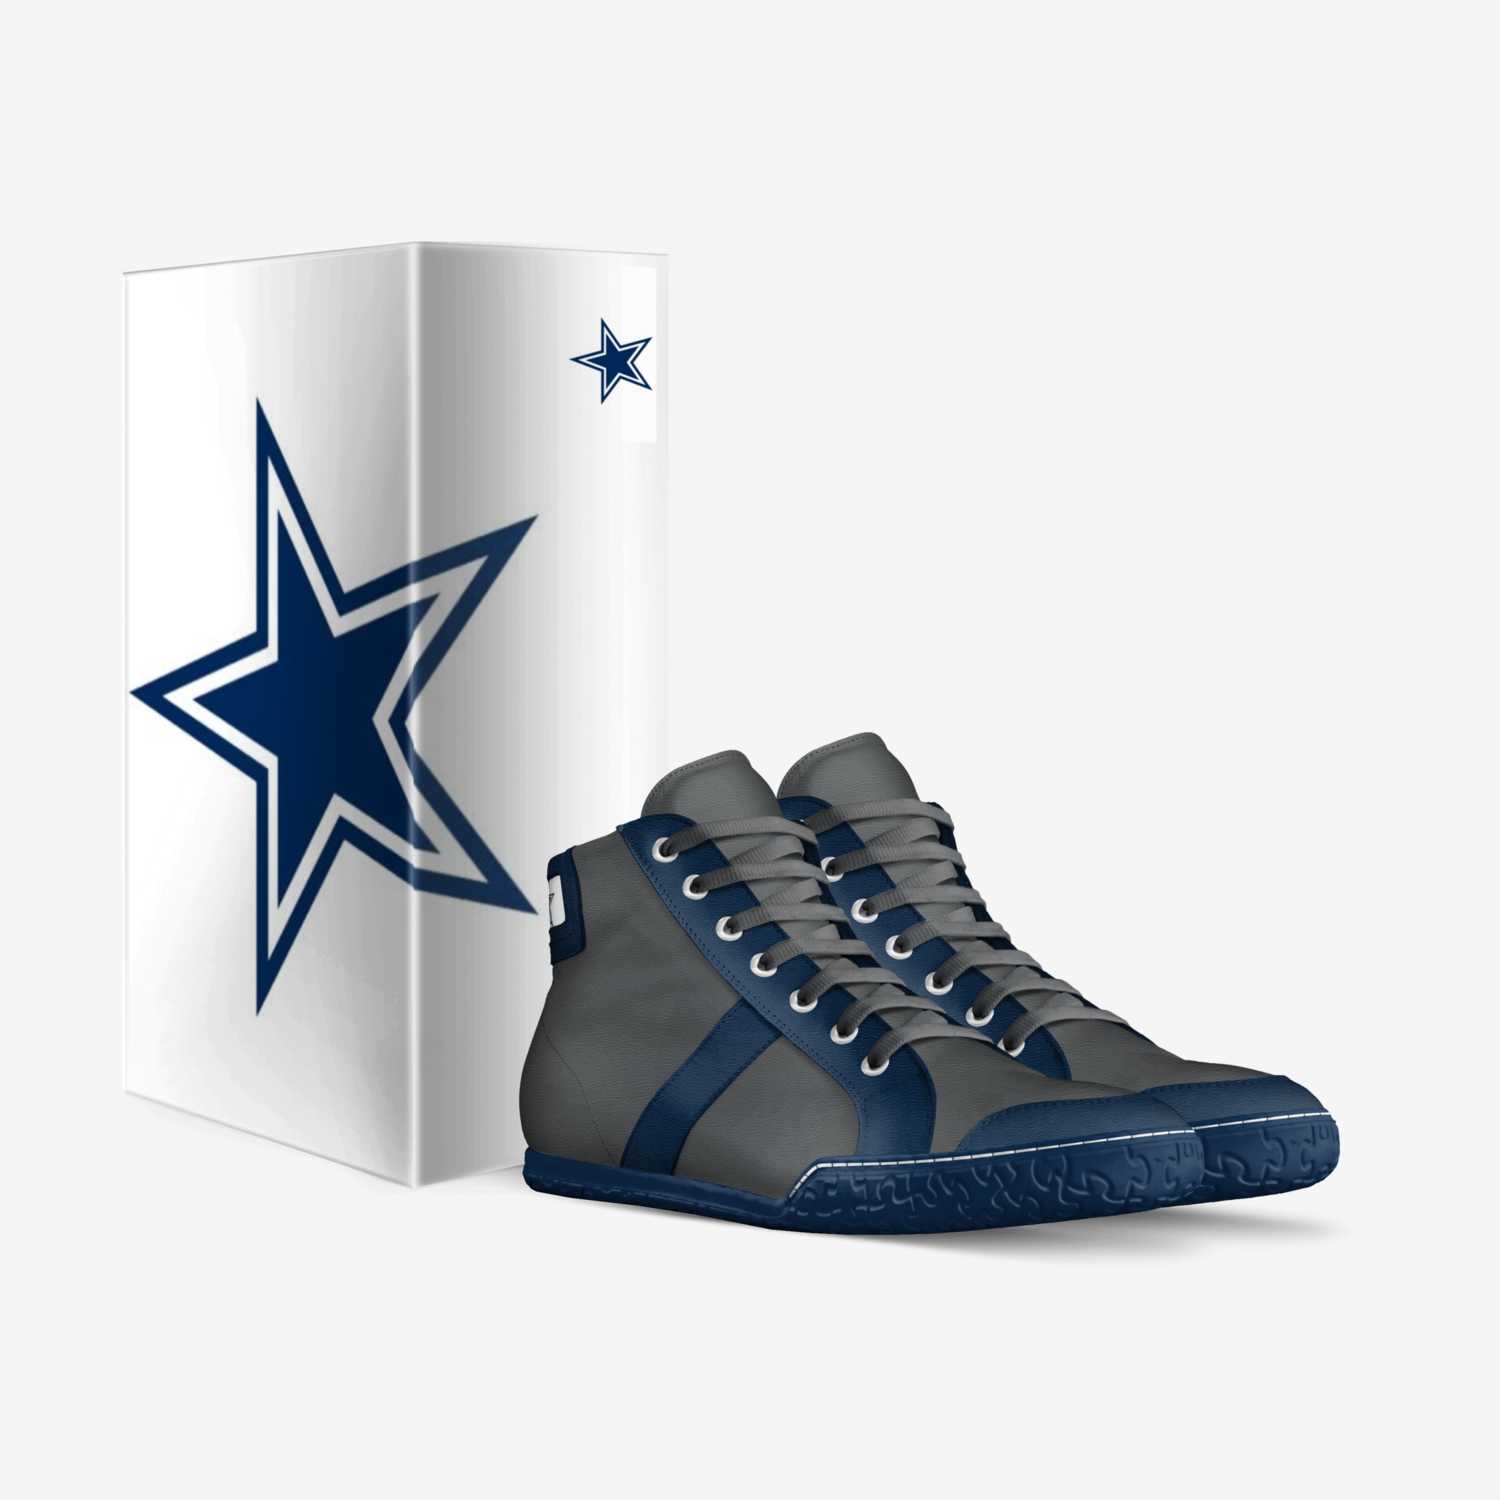 Dallas Nice custom made in Italy shoes by Natasha Robinson | Box view